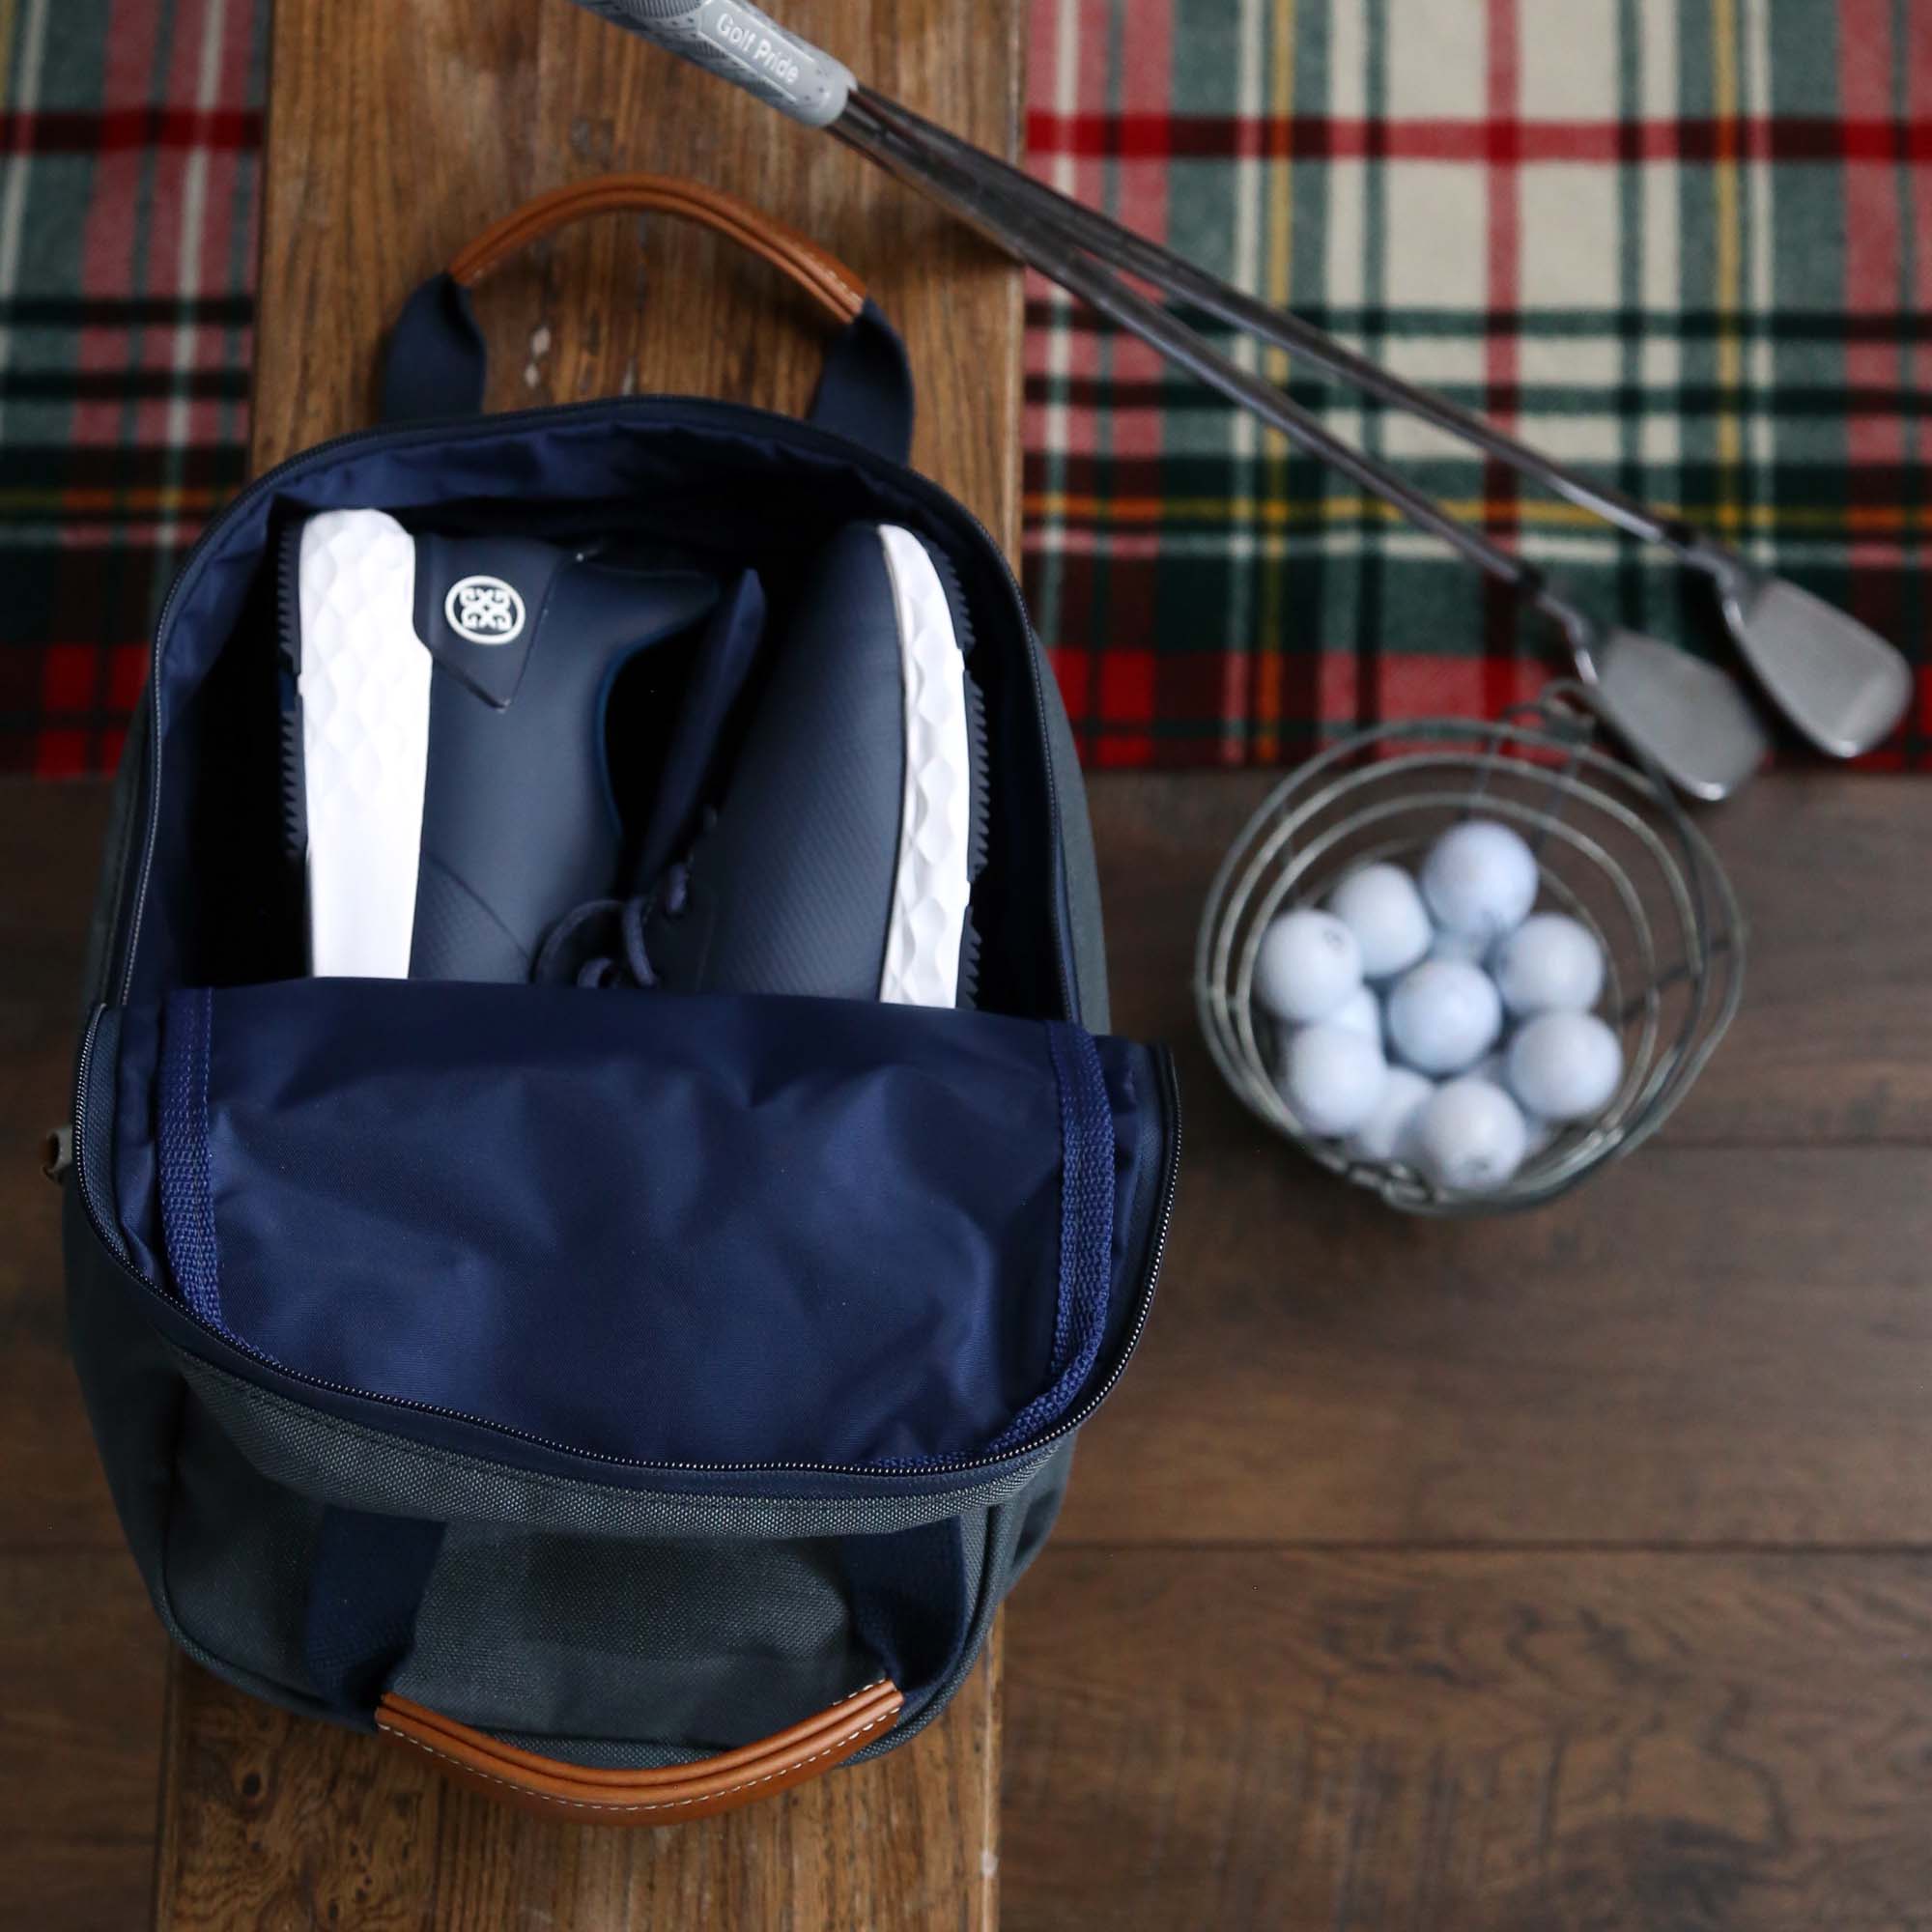 Hudson Sutler Nylon and Leather Golf Shoe Bag - Grey/Navy